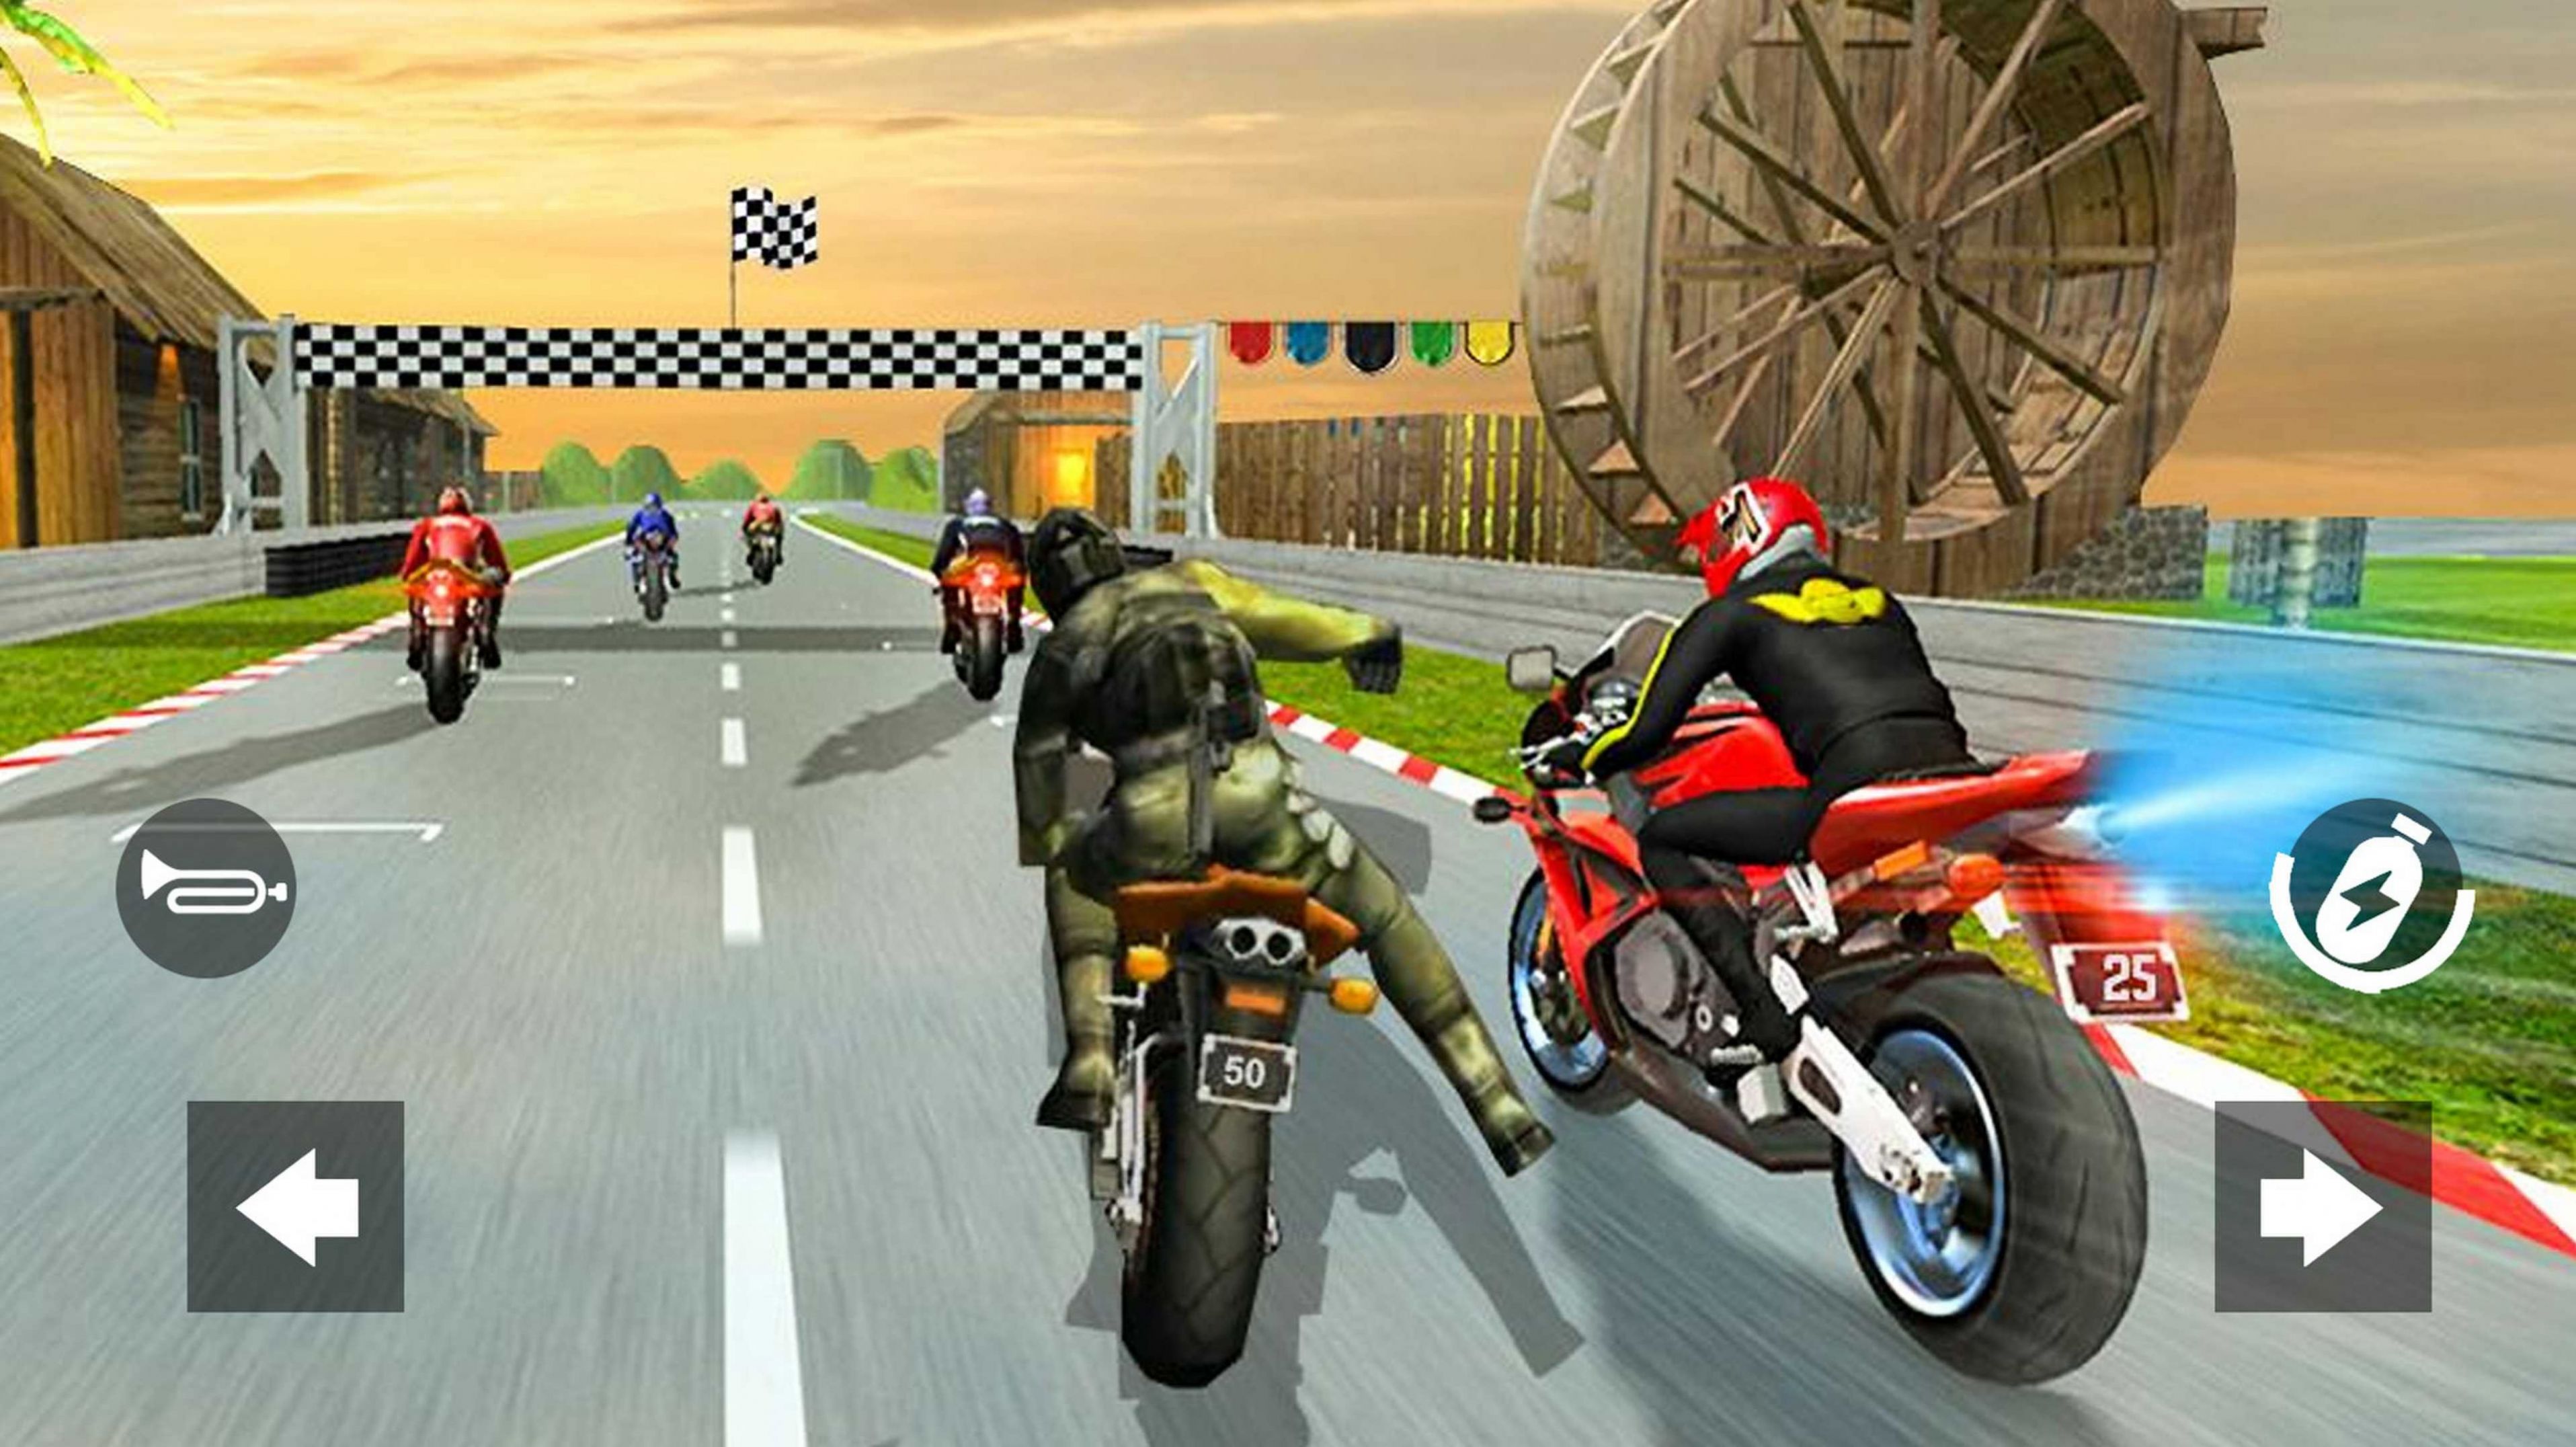 Motorbike Kick Race游戏手机版下载安装图片1